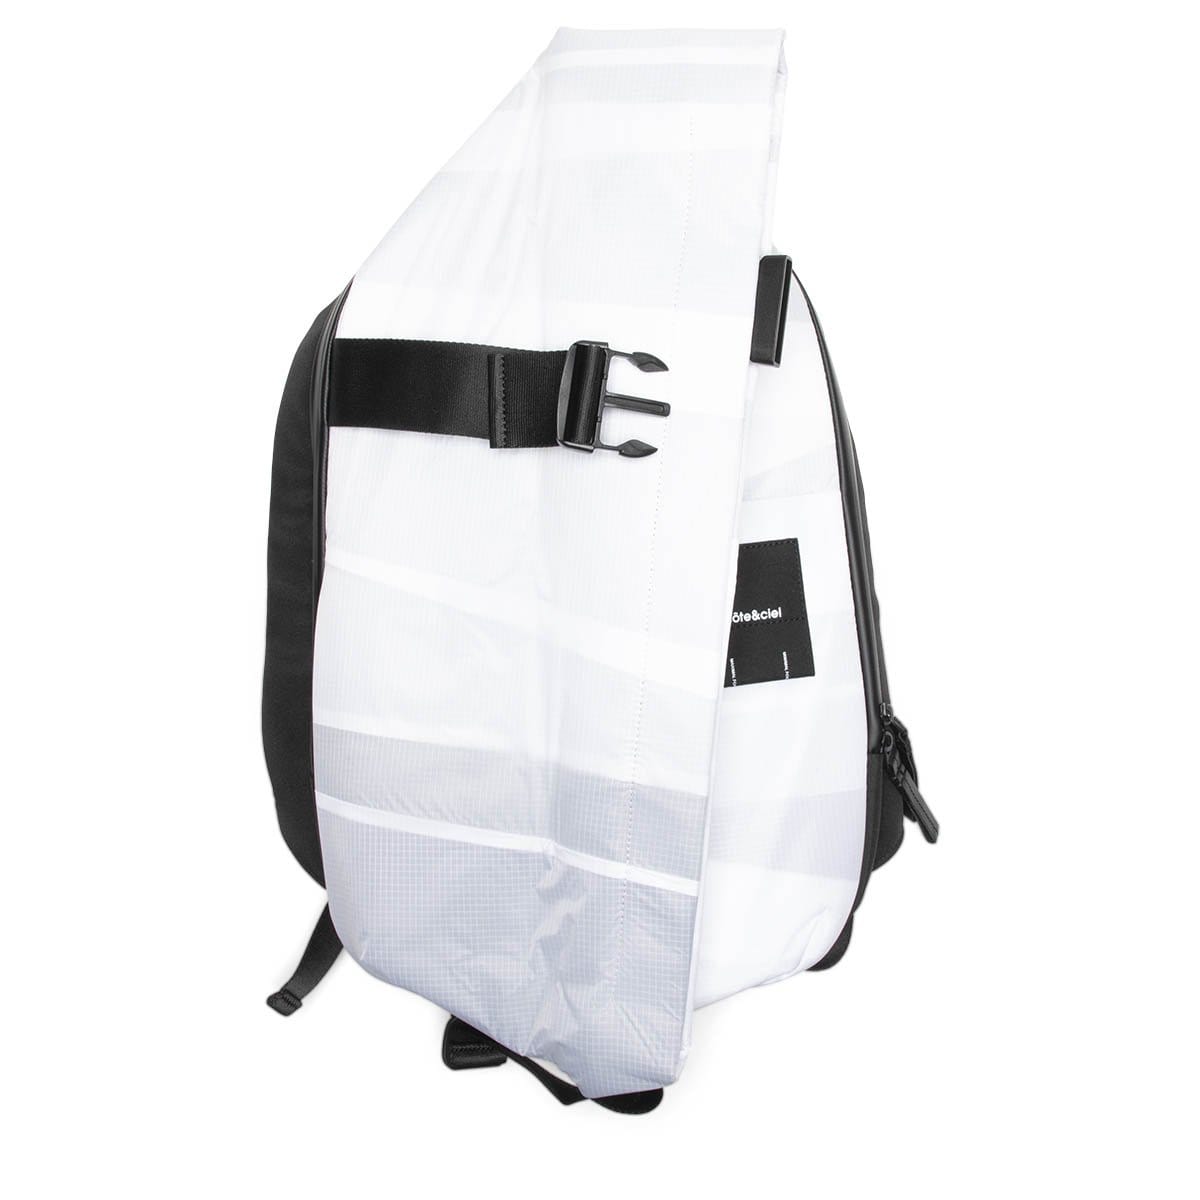 Côte&Ciel Bags & Accessories WHITE / O/S ISAR MEDIUM